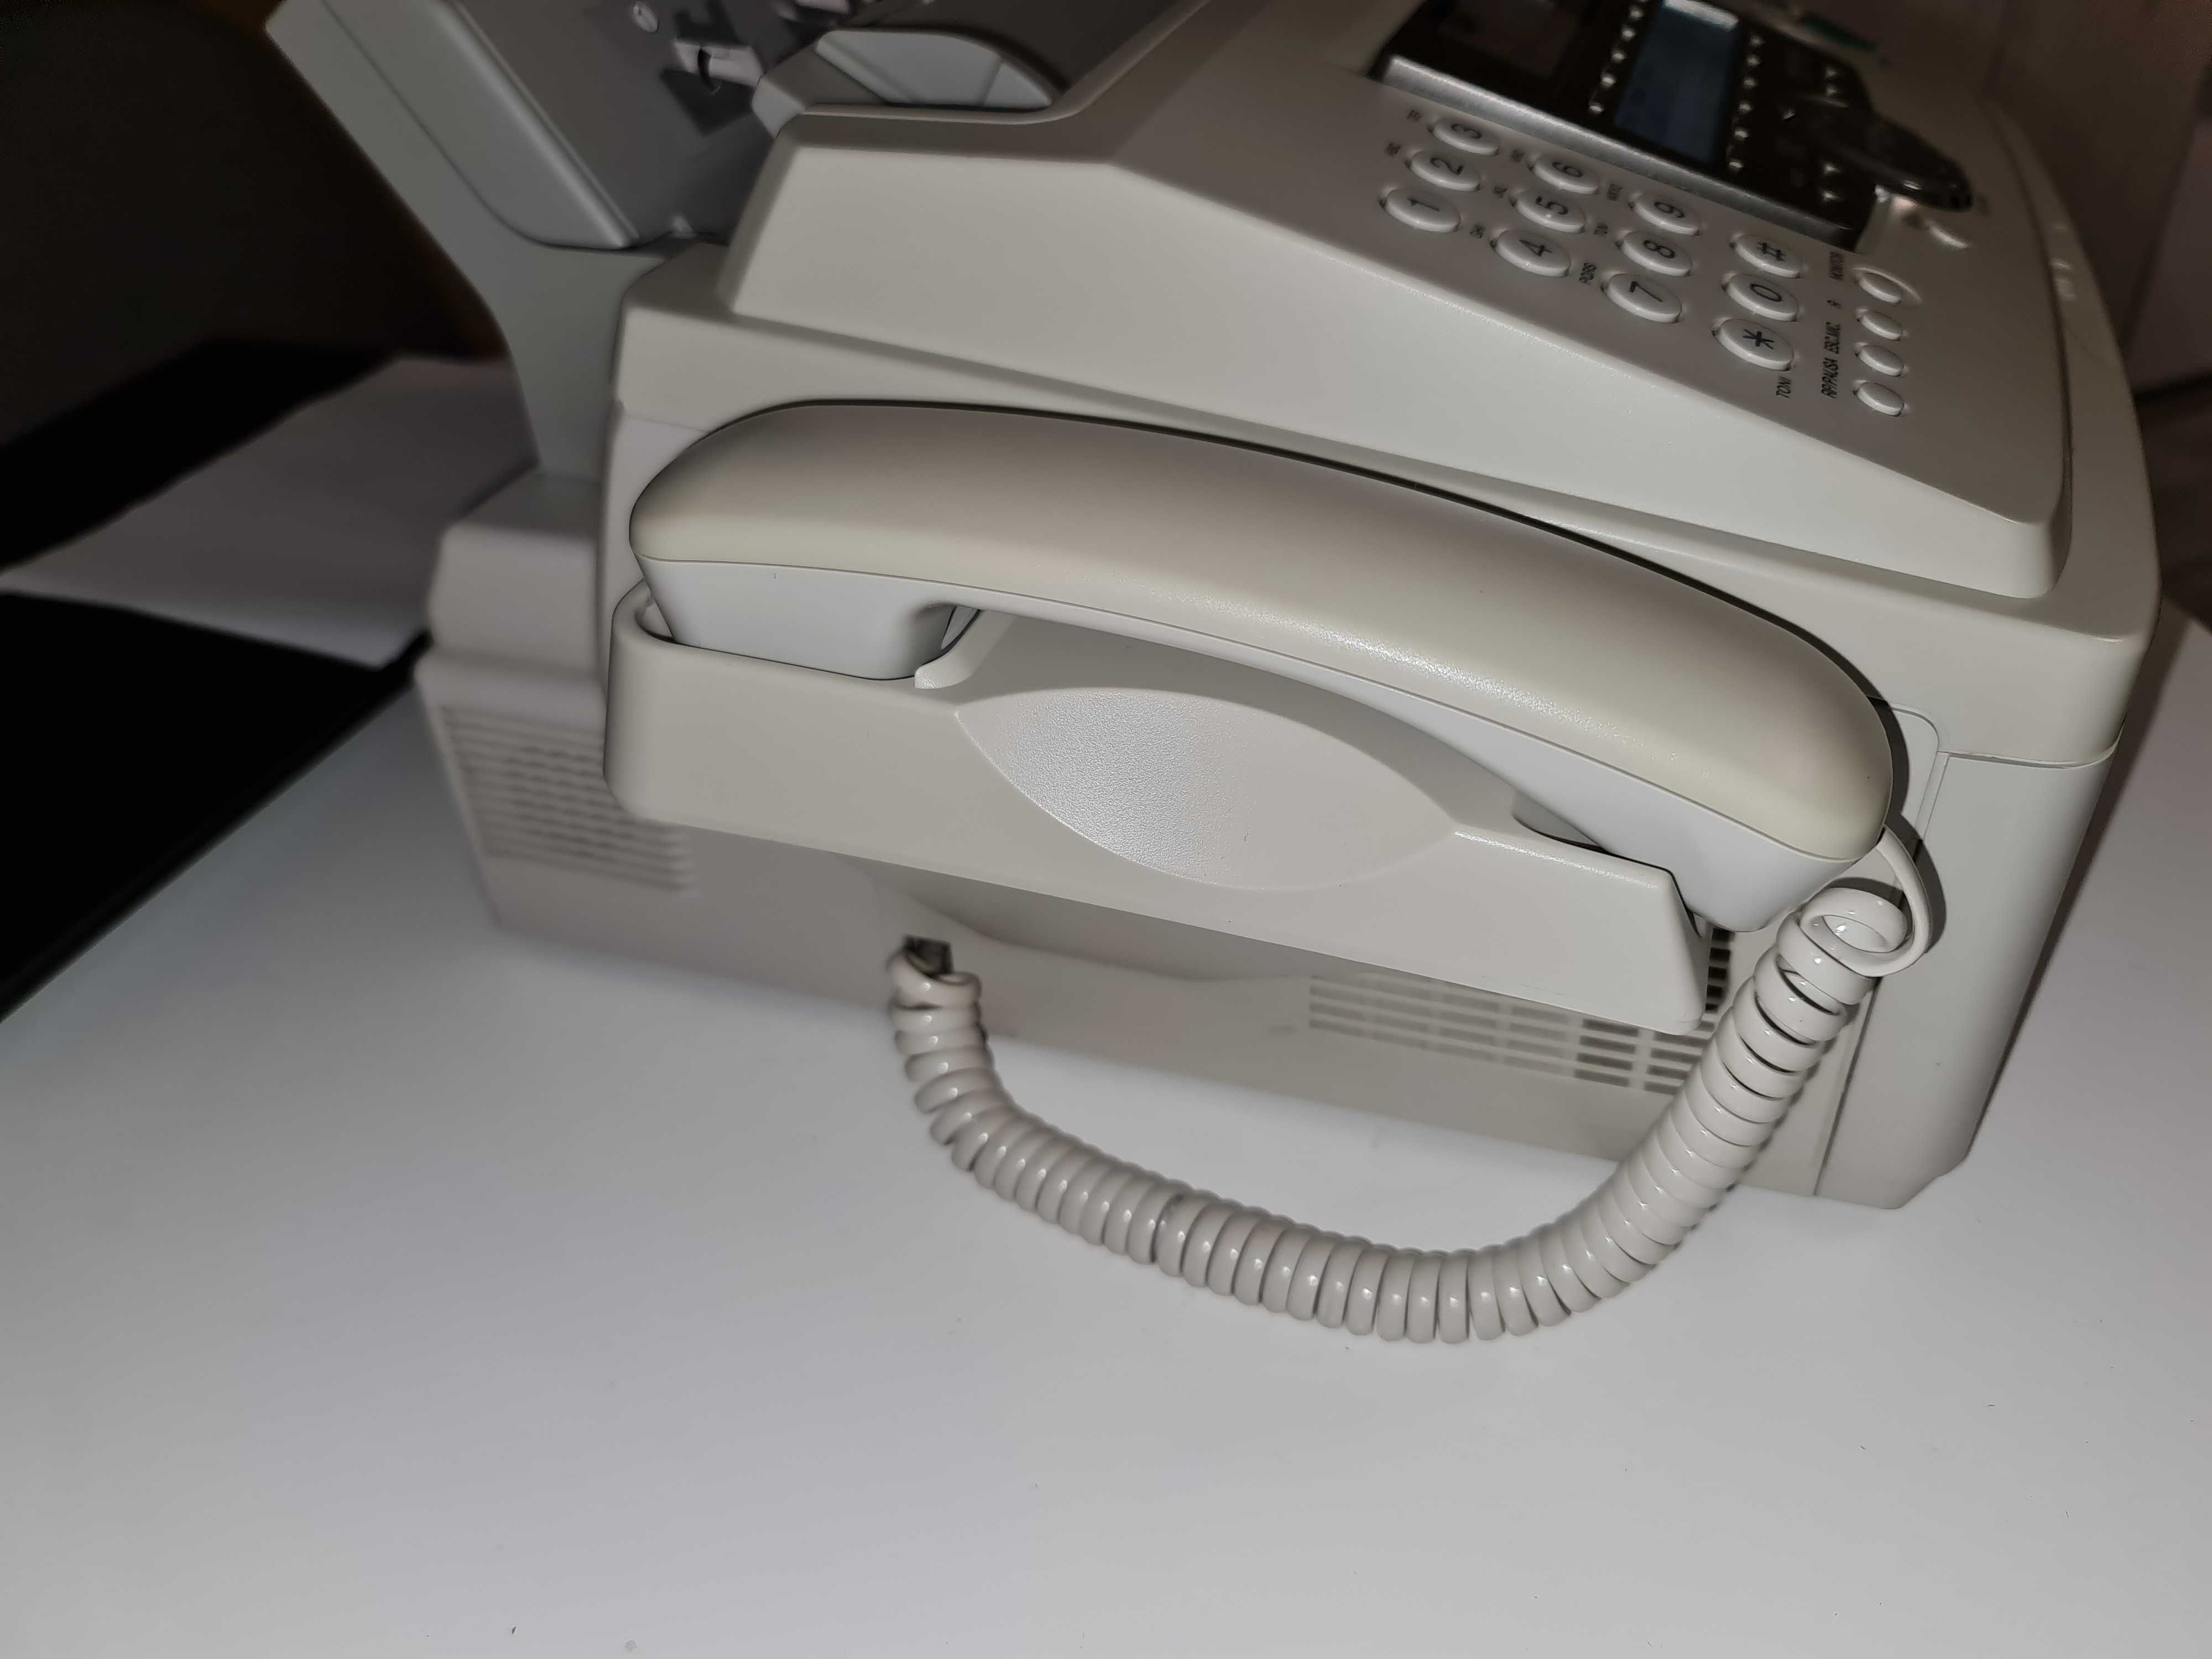 Panasonic KX-FL541 Multifunctional Printer-Copier-Fax